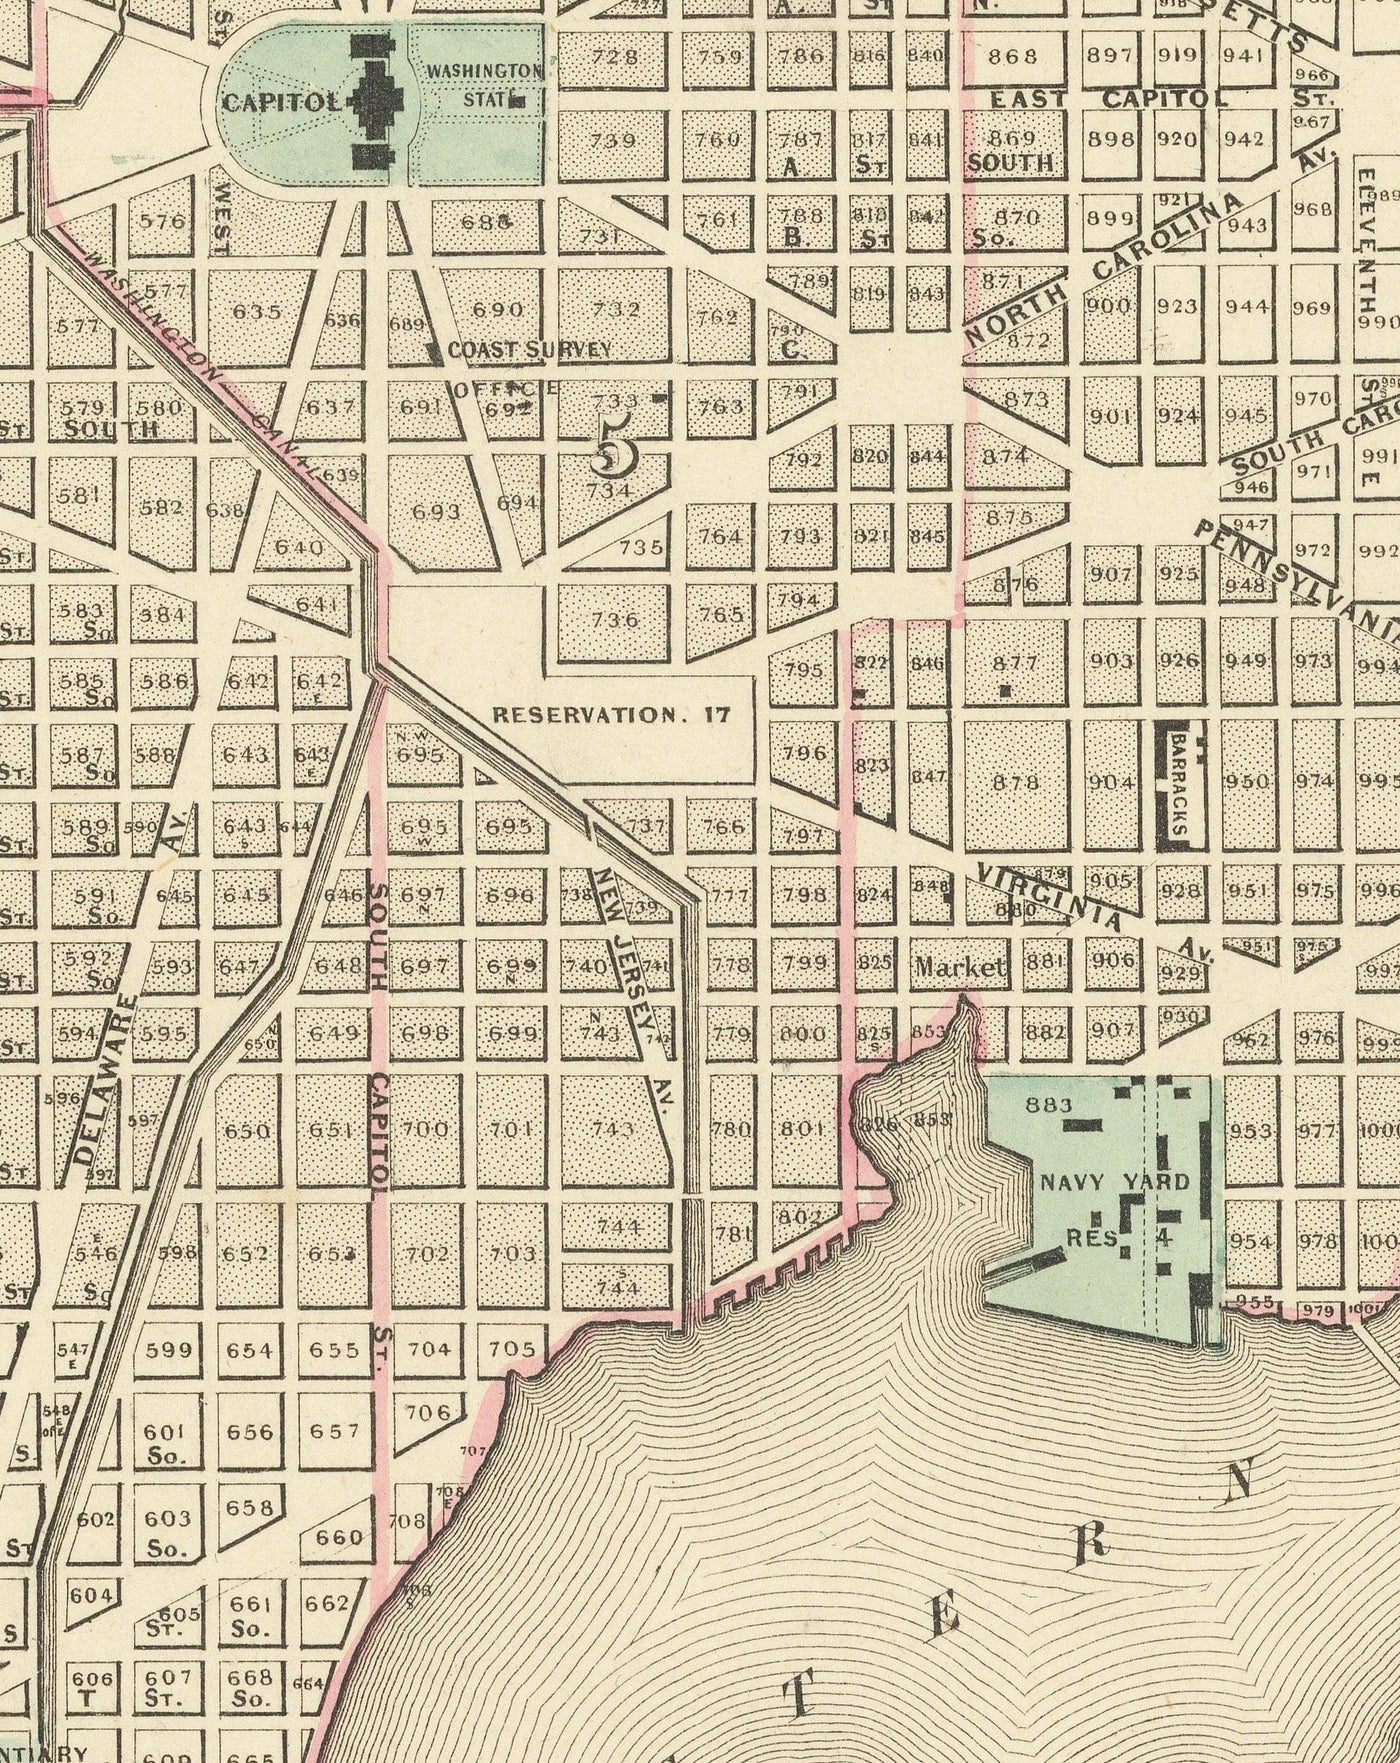 Viejo mapa de Washington DC, 1855 de Colton - Georgetown, Capitol, Monumento, Casa Blanca del Presidente, Smithsonian